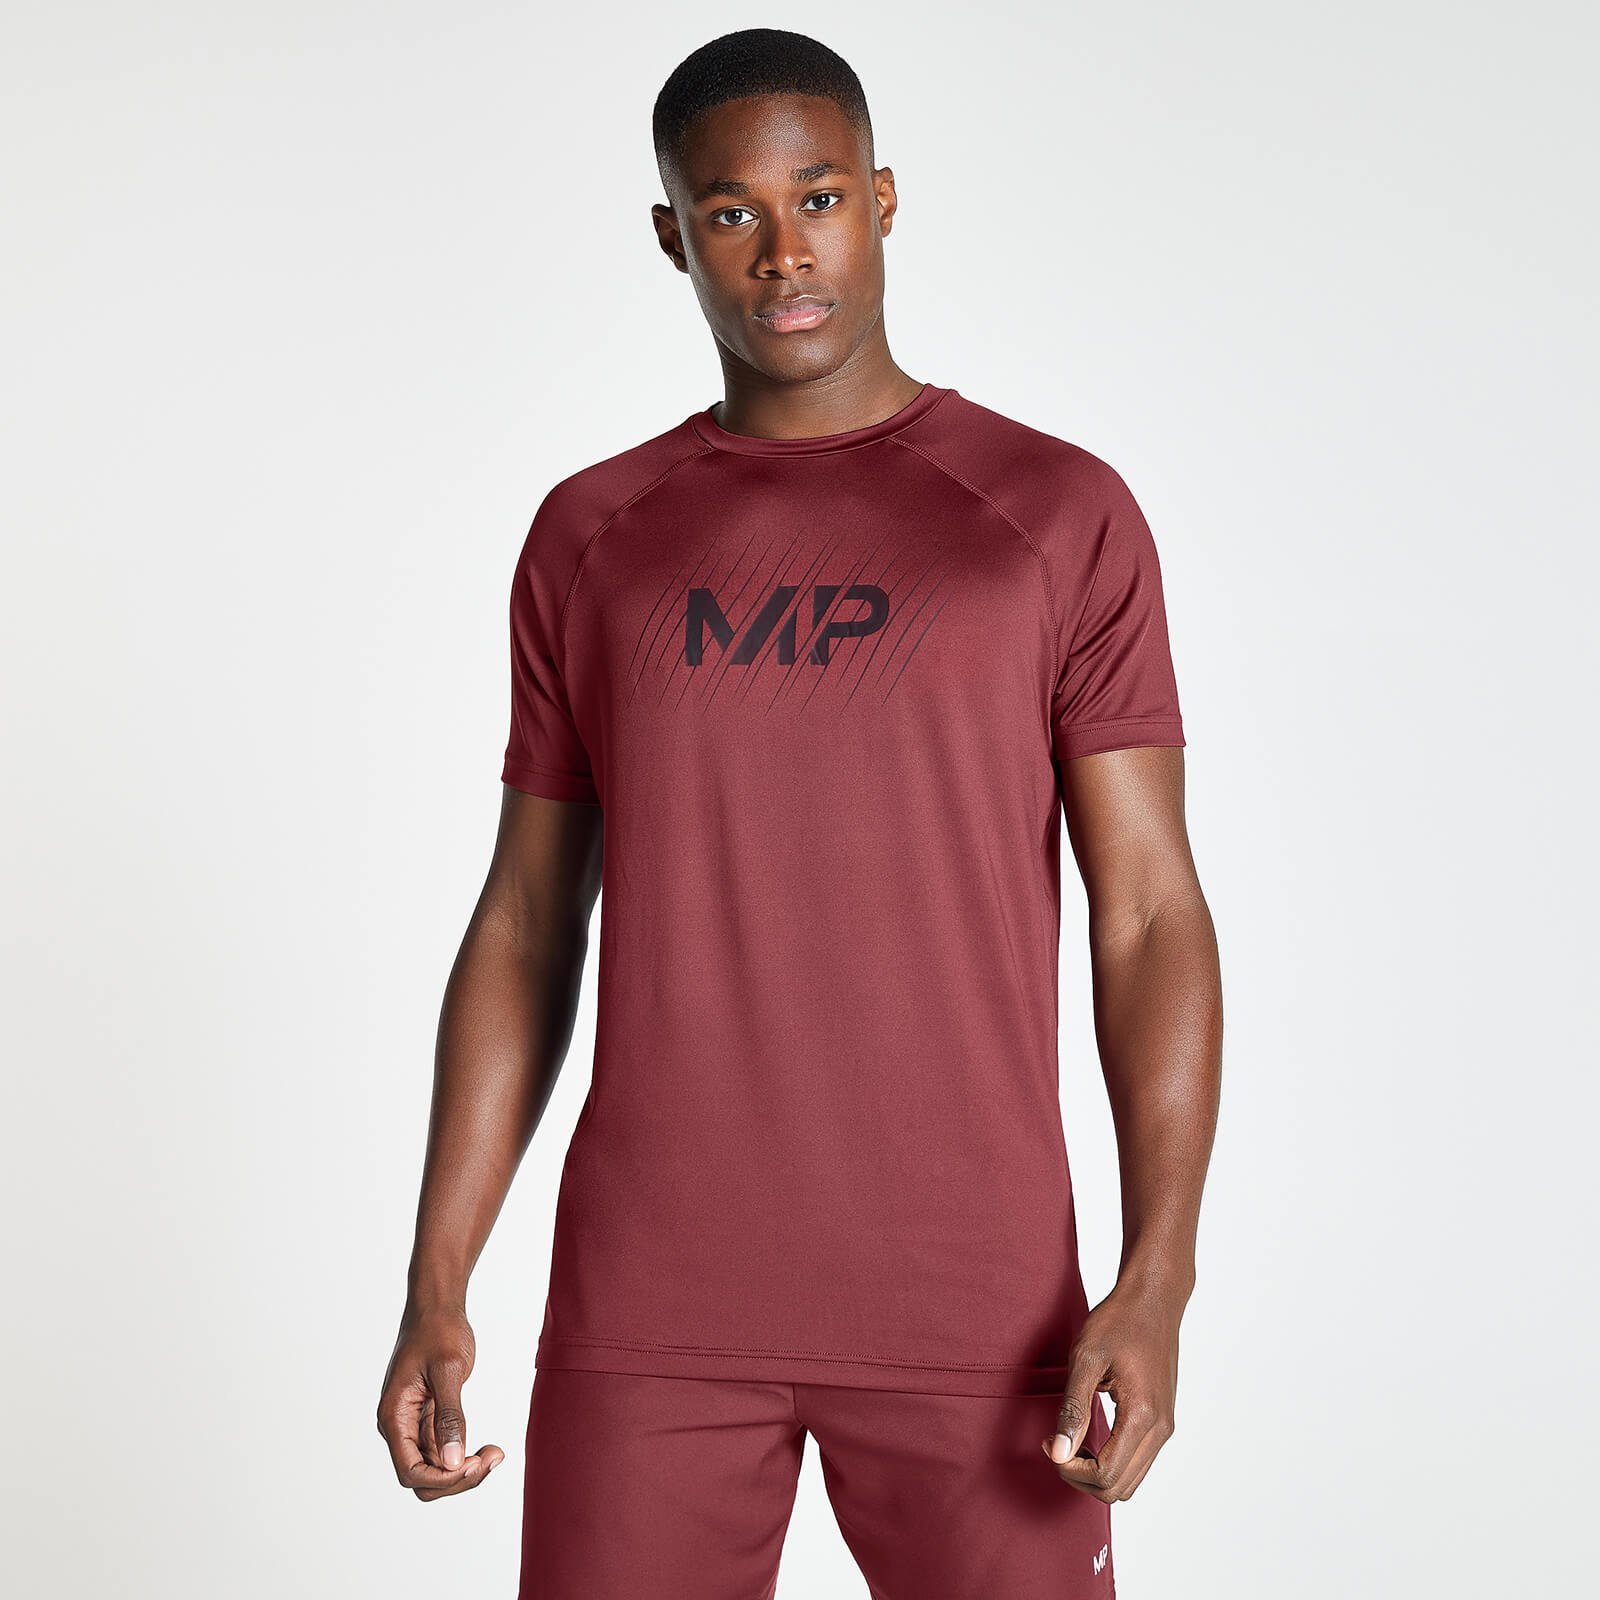 MP Men's Linear Line Graphic Essentials Training Short Sleeve T-Shirt - Dark Red - S